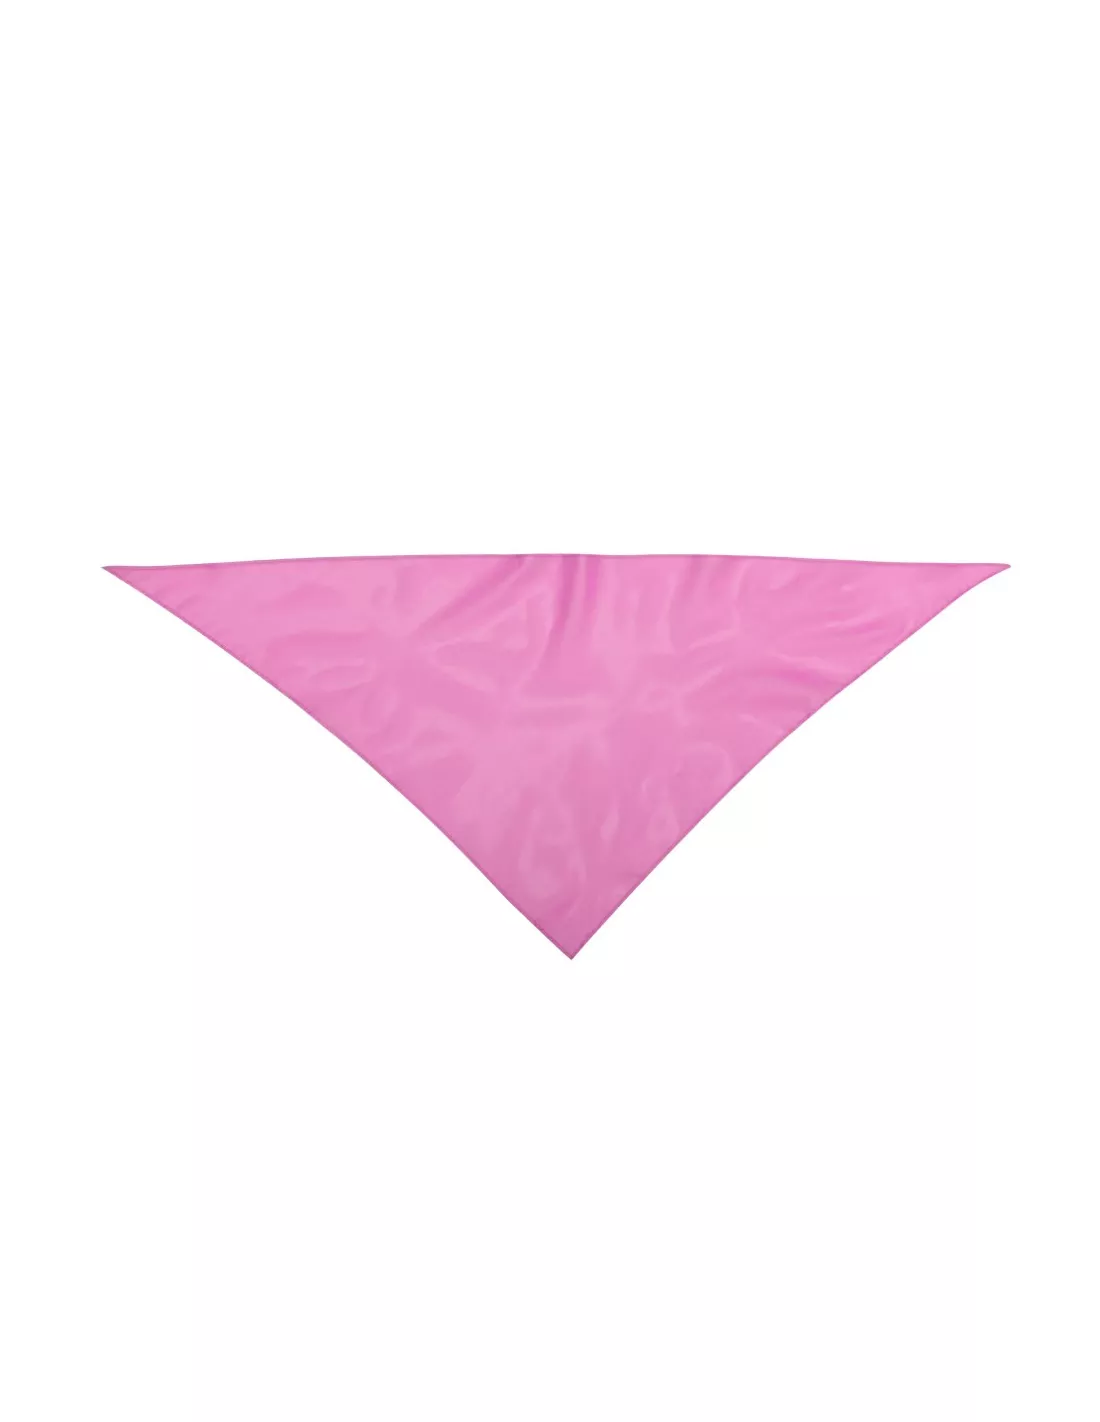 Pañoleta Triangular Personalizada de color rosa